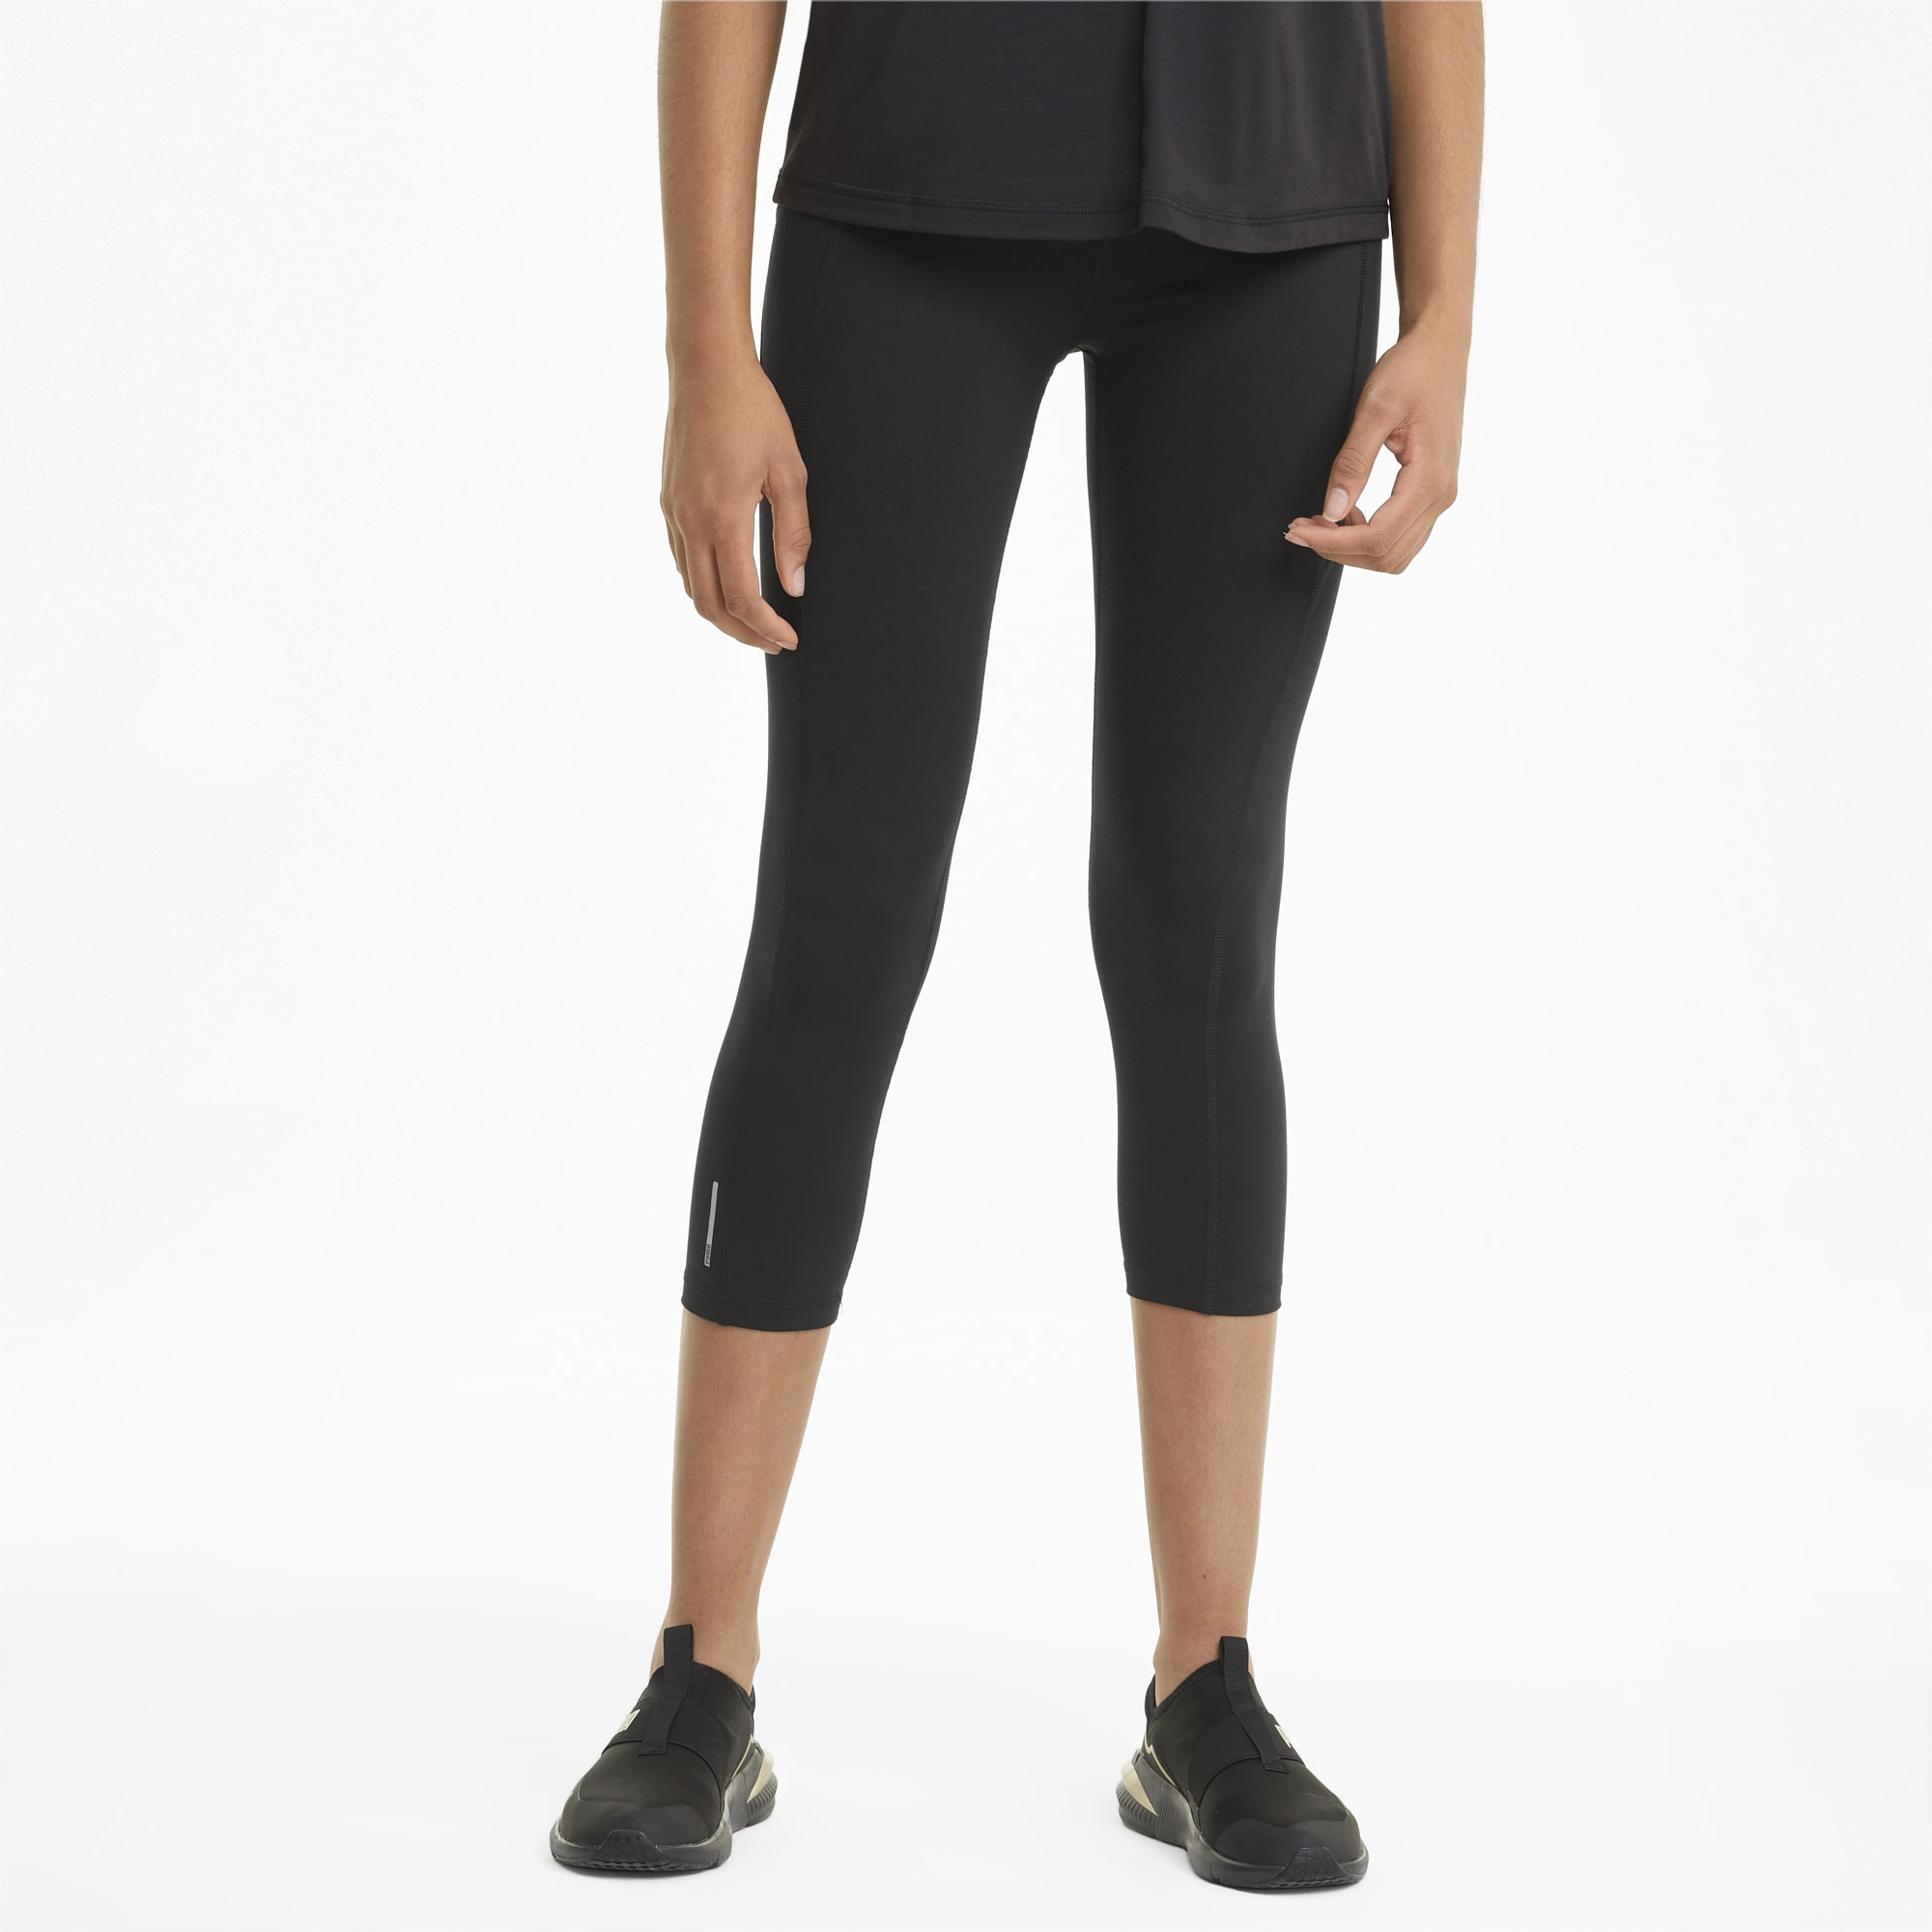 Nike Dry 3/4 Tights Yoga Iron Grey/Black XL : Clothing, Shoes & Jewelry 